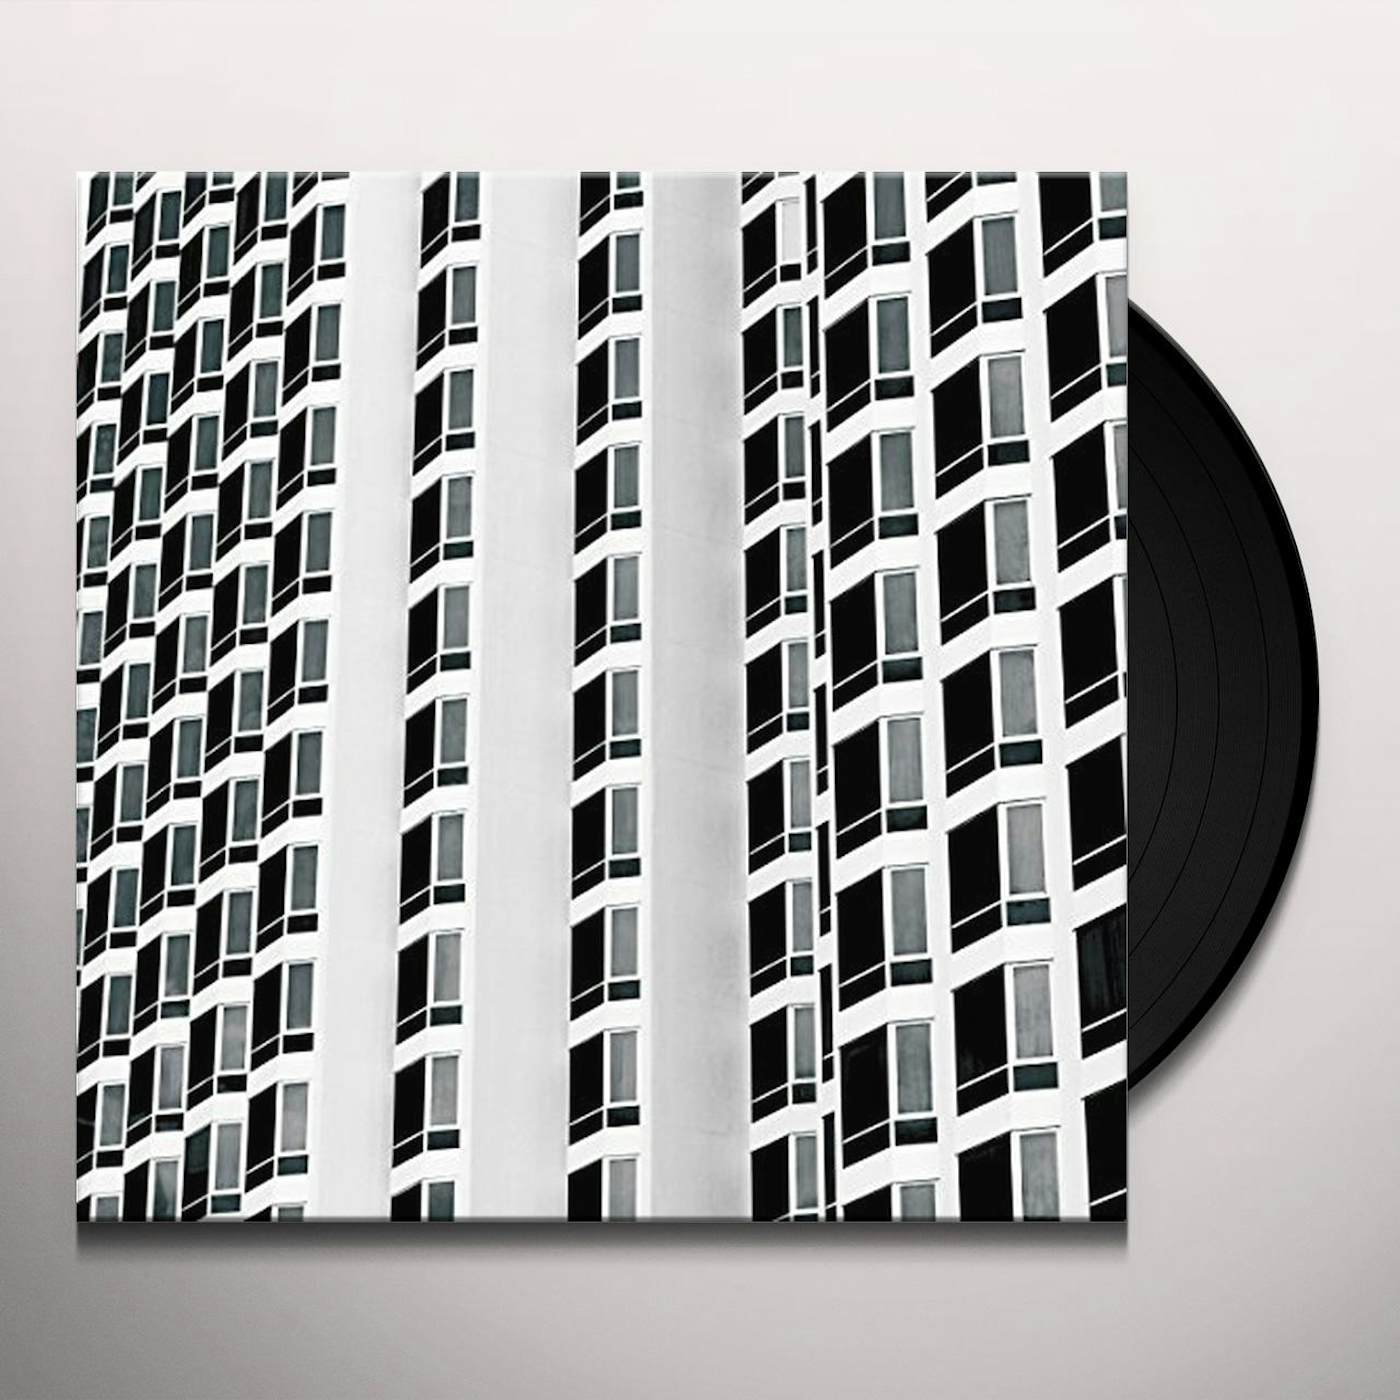 The KVB Fixation / White Walls Vinyl Record